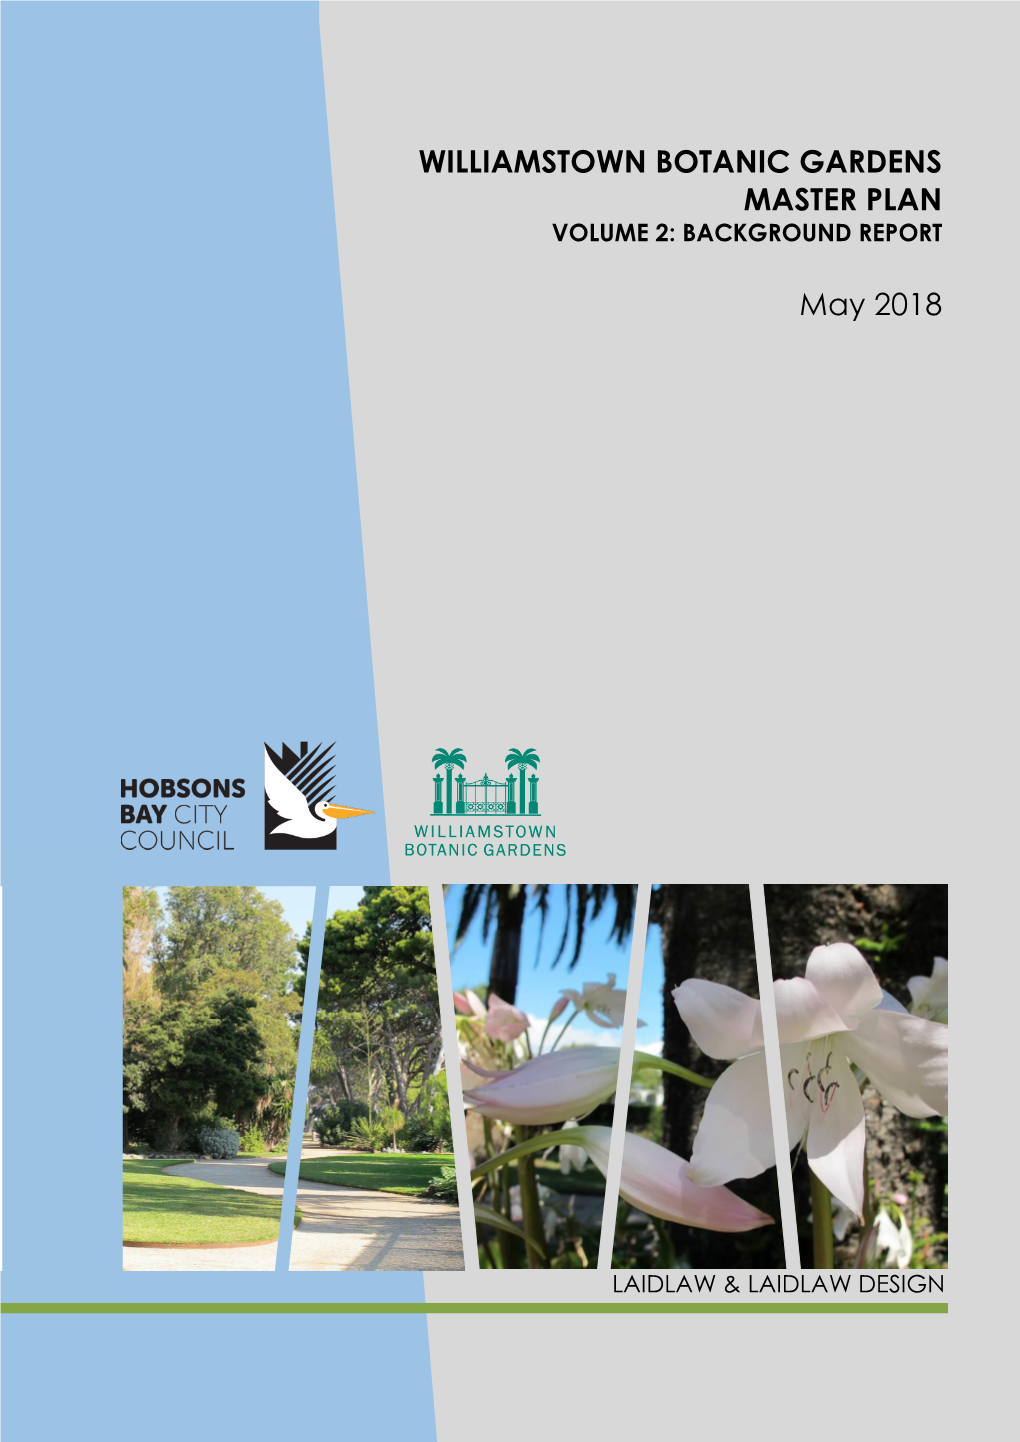 Williamstown Botanic Gardens Master Plan May 2018 Volume 2: Background Report